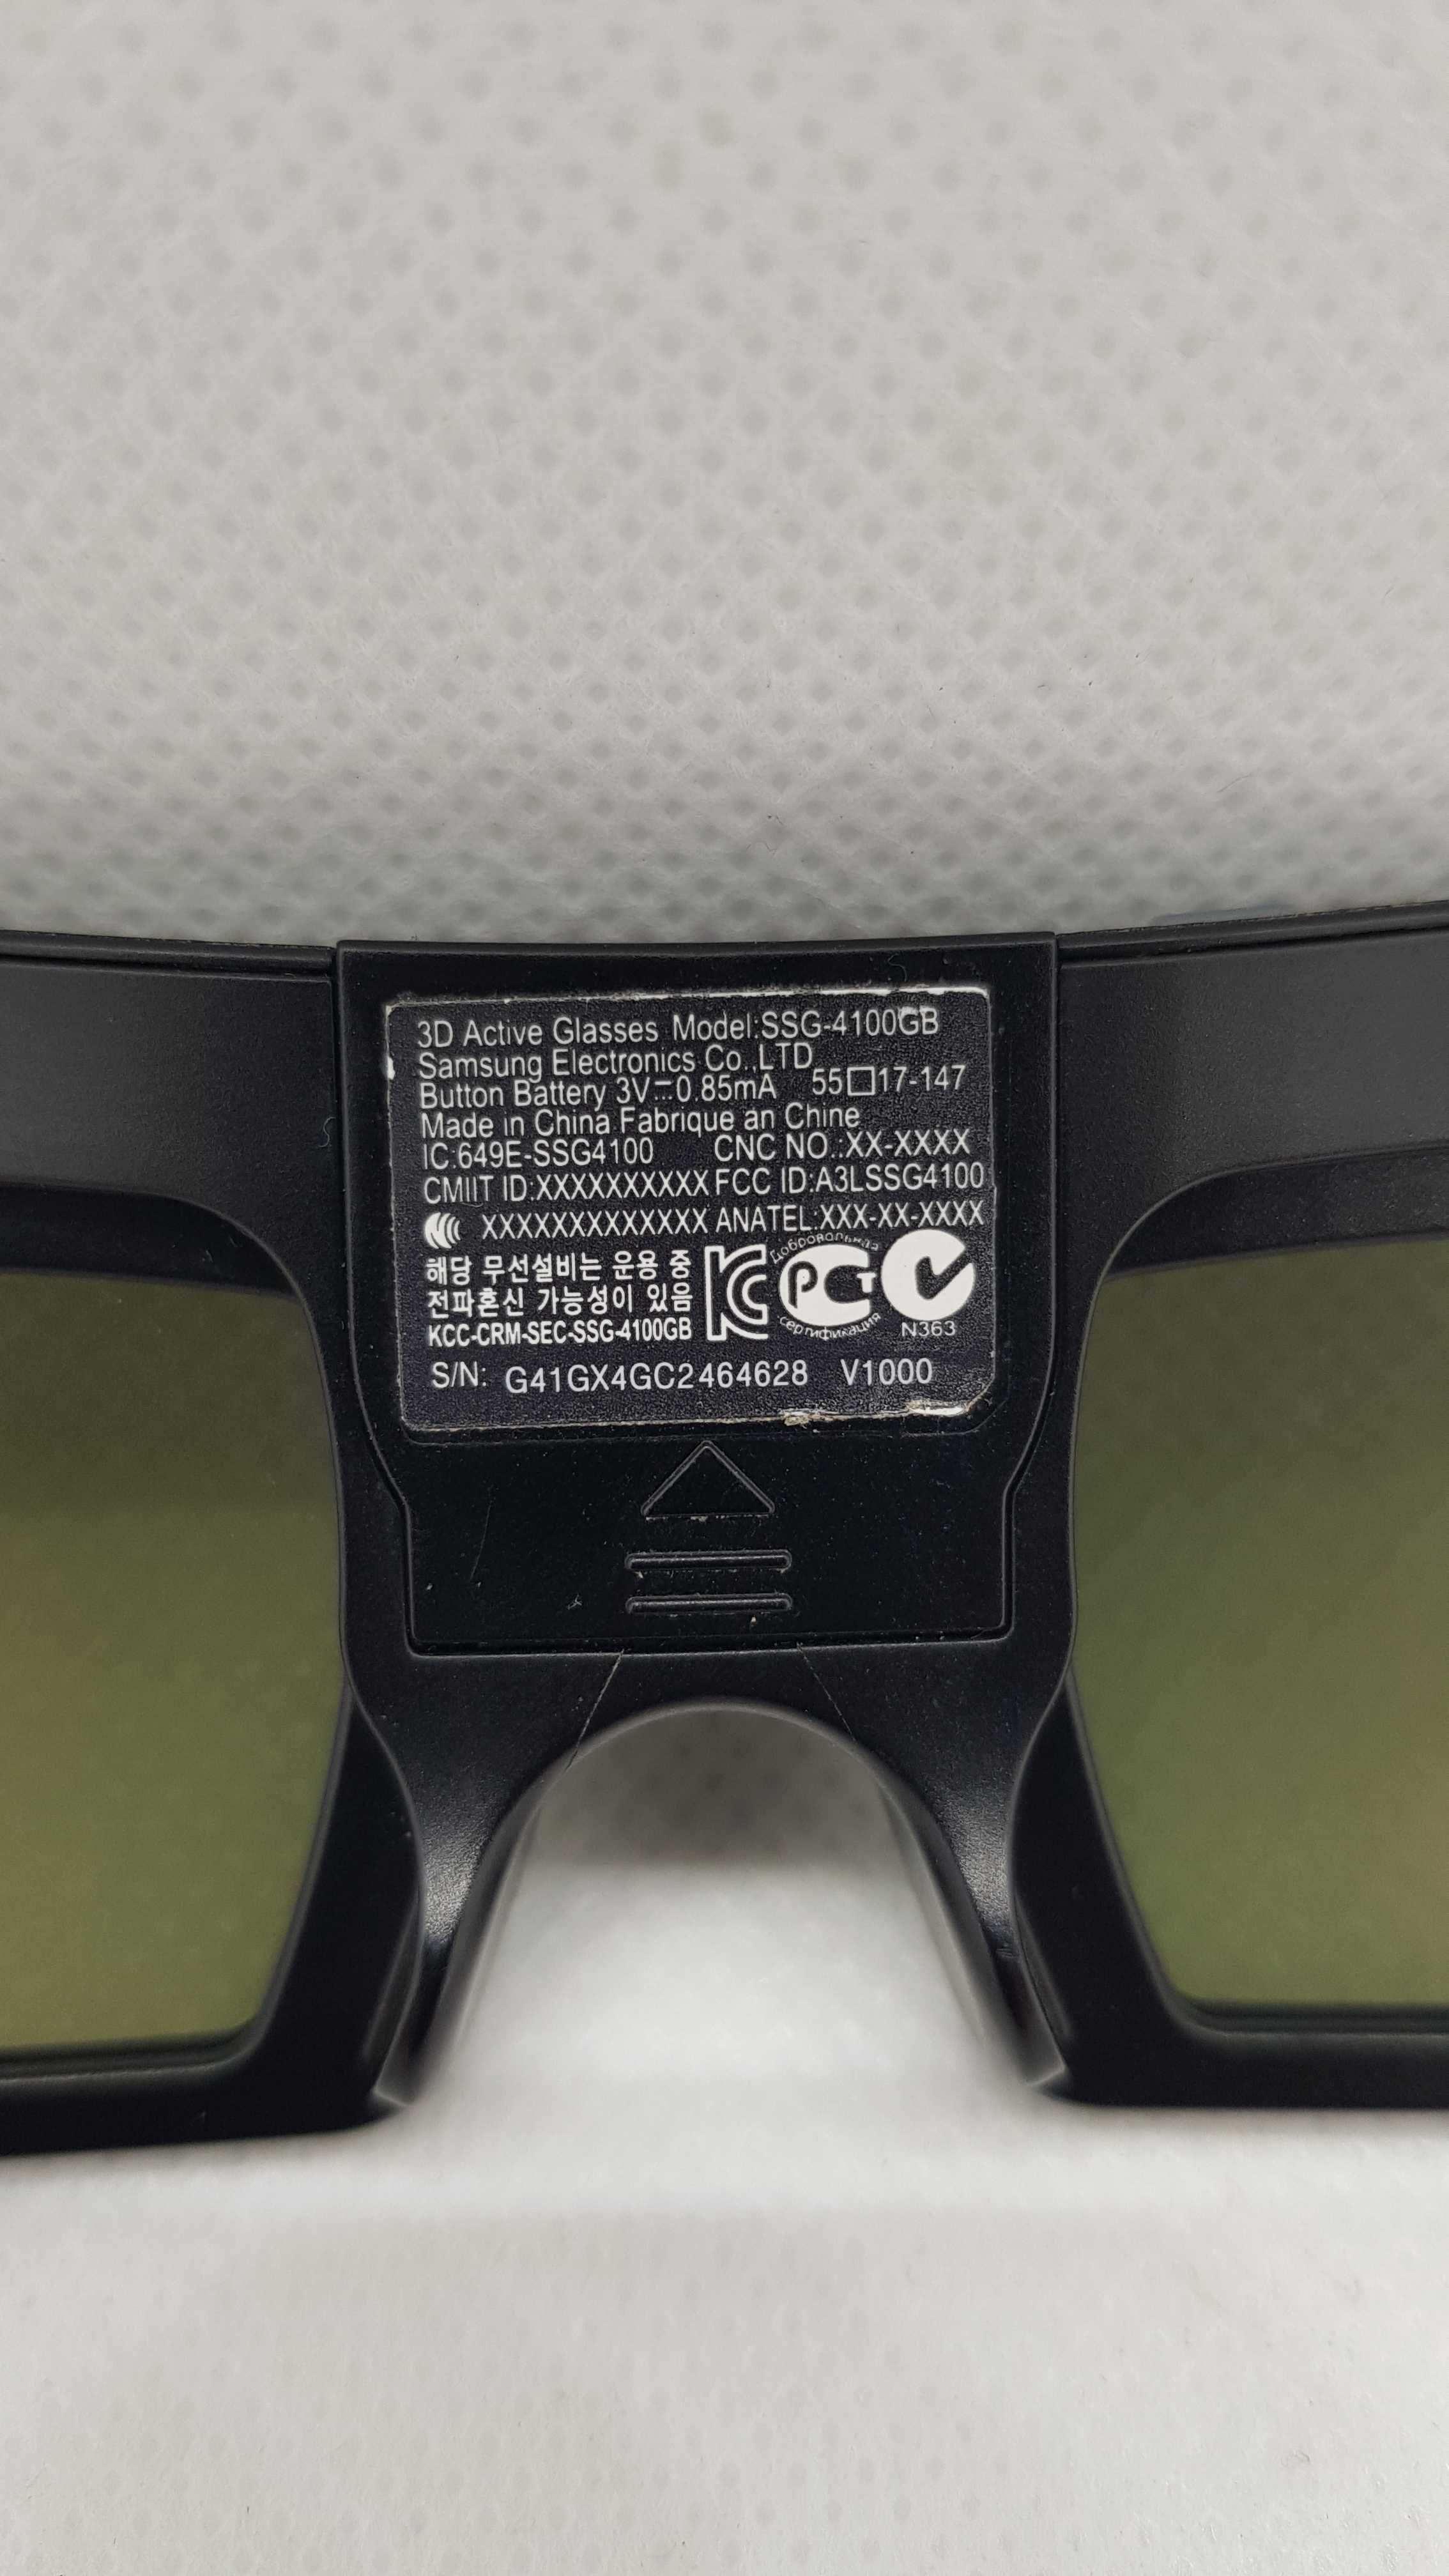 Okulary 3D Samsung SSG-4100GB aktywne